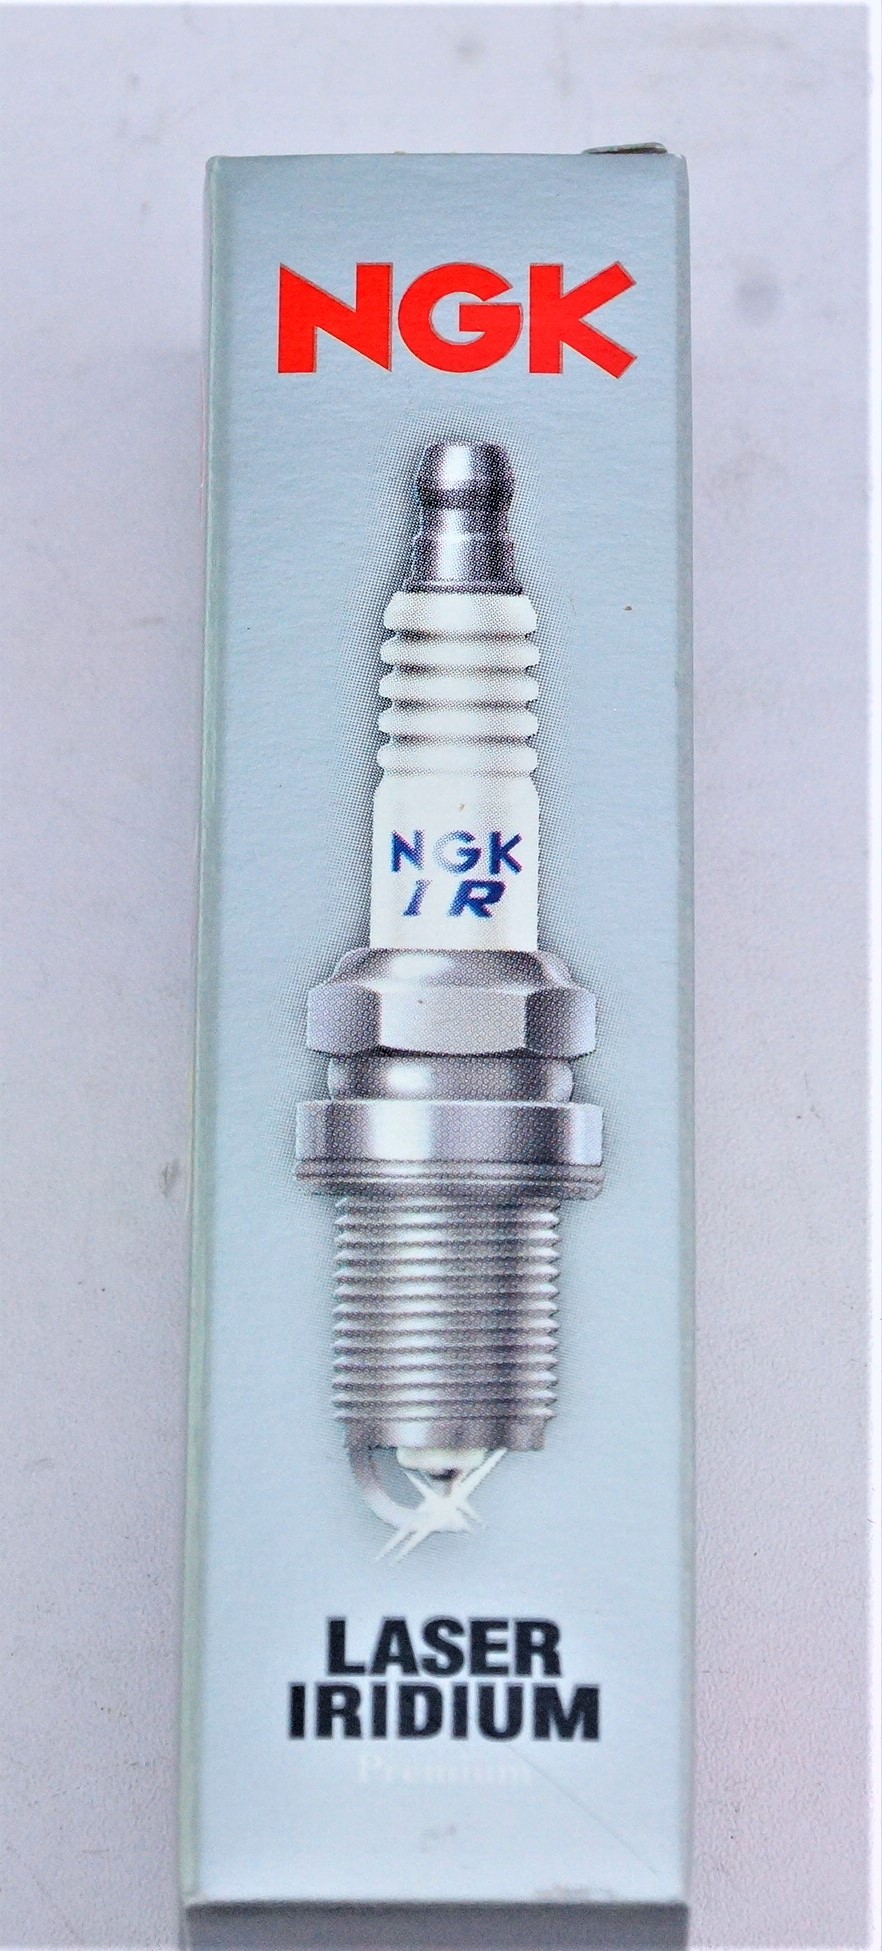 Pack of 16 - New Genuine NGK 92145 Laser Iridium Spark Plug Fast Free Shipping - image 10